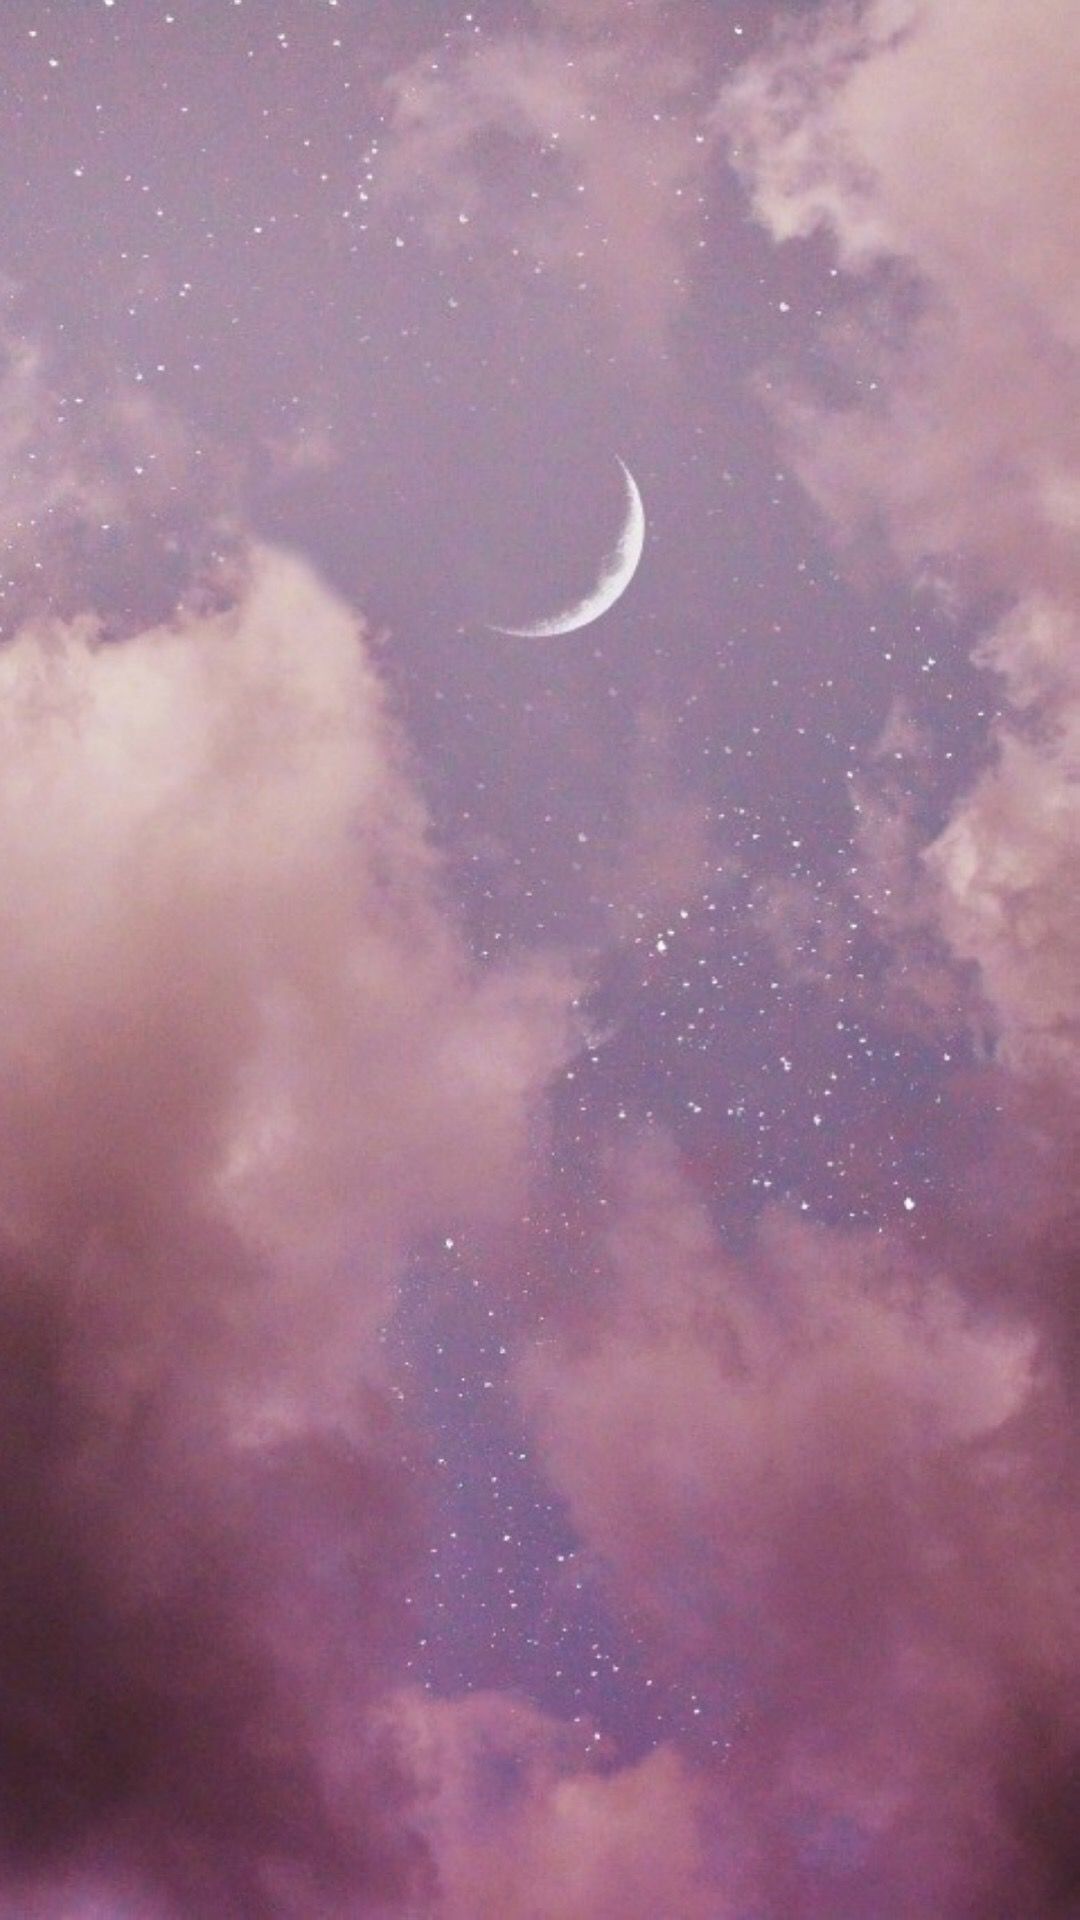 Aesthetic Moon iPhone Background. iPhone wallpaper stars, Pink moon wallpaper, iPhone wallpaper sky